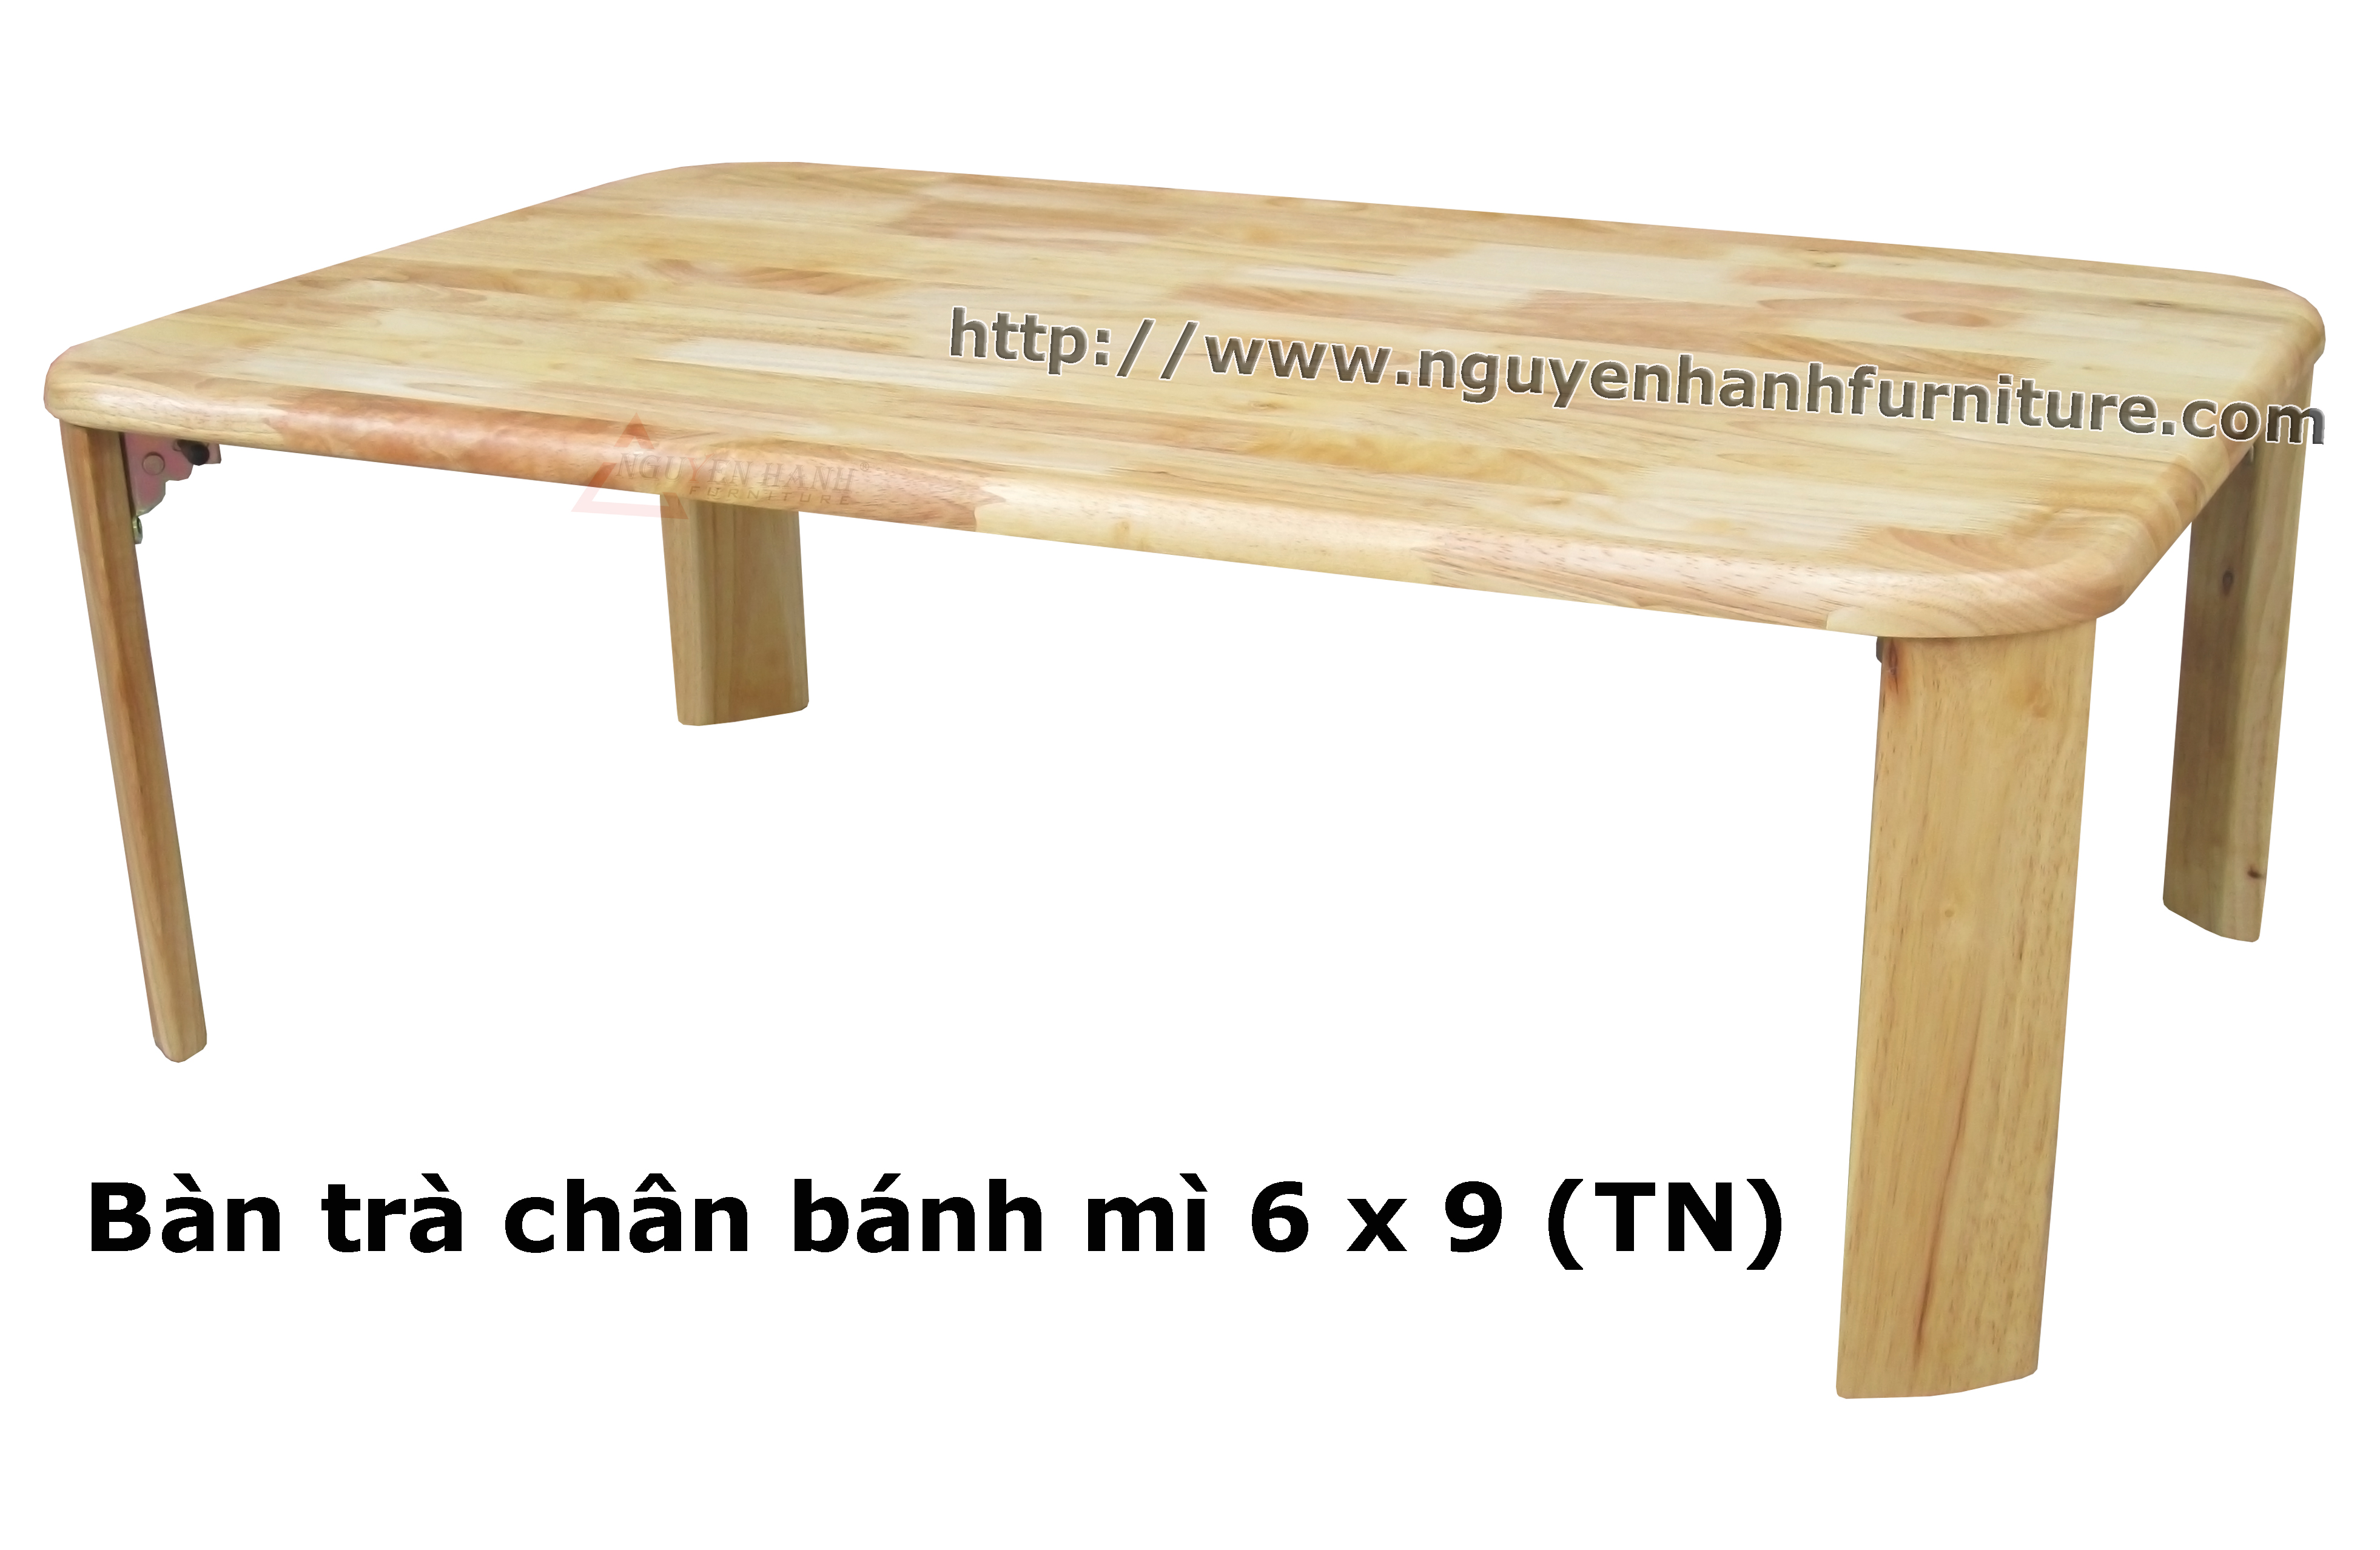 Name product: 6 x 9 Bread shape Tea table (Natural) - Dimensions: 60 x 90 x 30 (H) - Description: Wood natural rubber